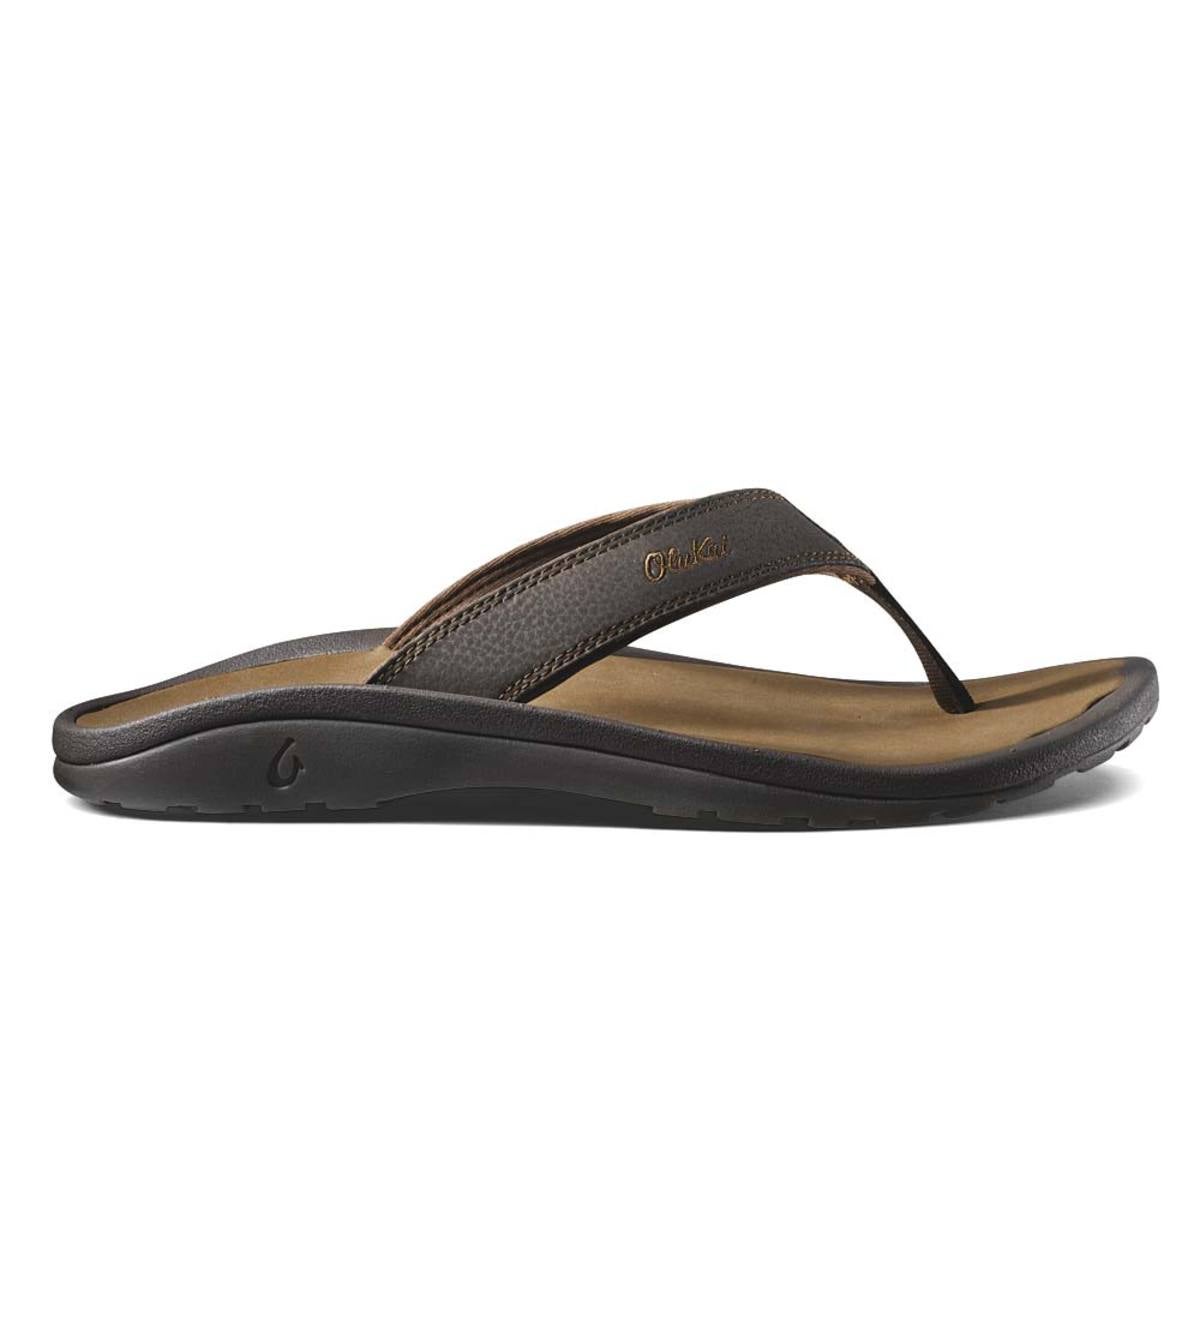 Men's OluKai® Ohana Flip-Flop Sandals - Black/Black - Size 8 | PlowHearth